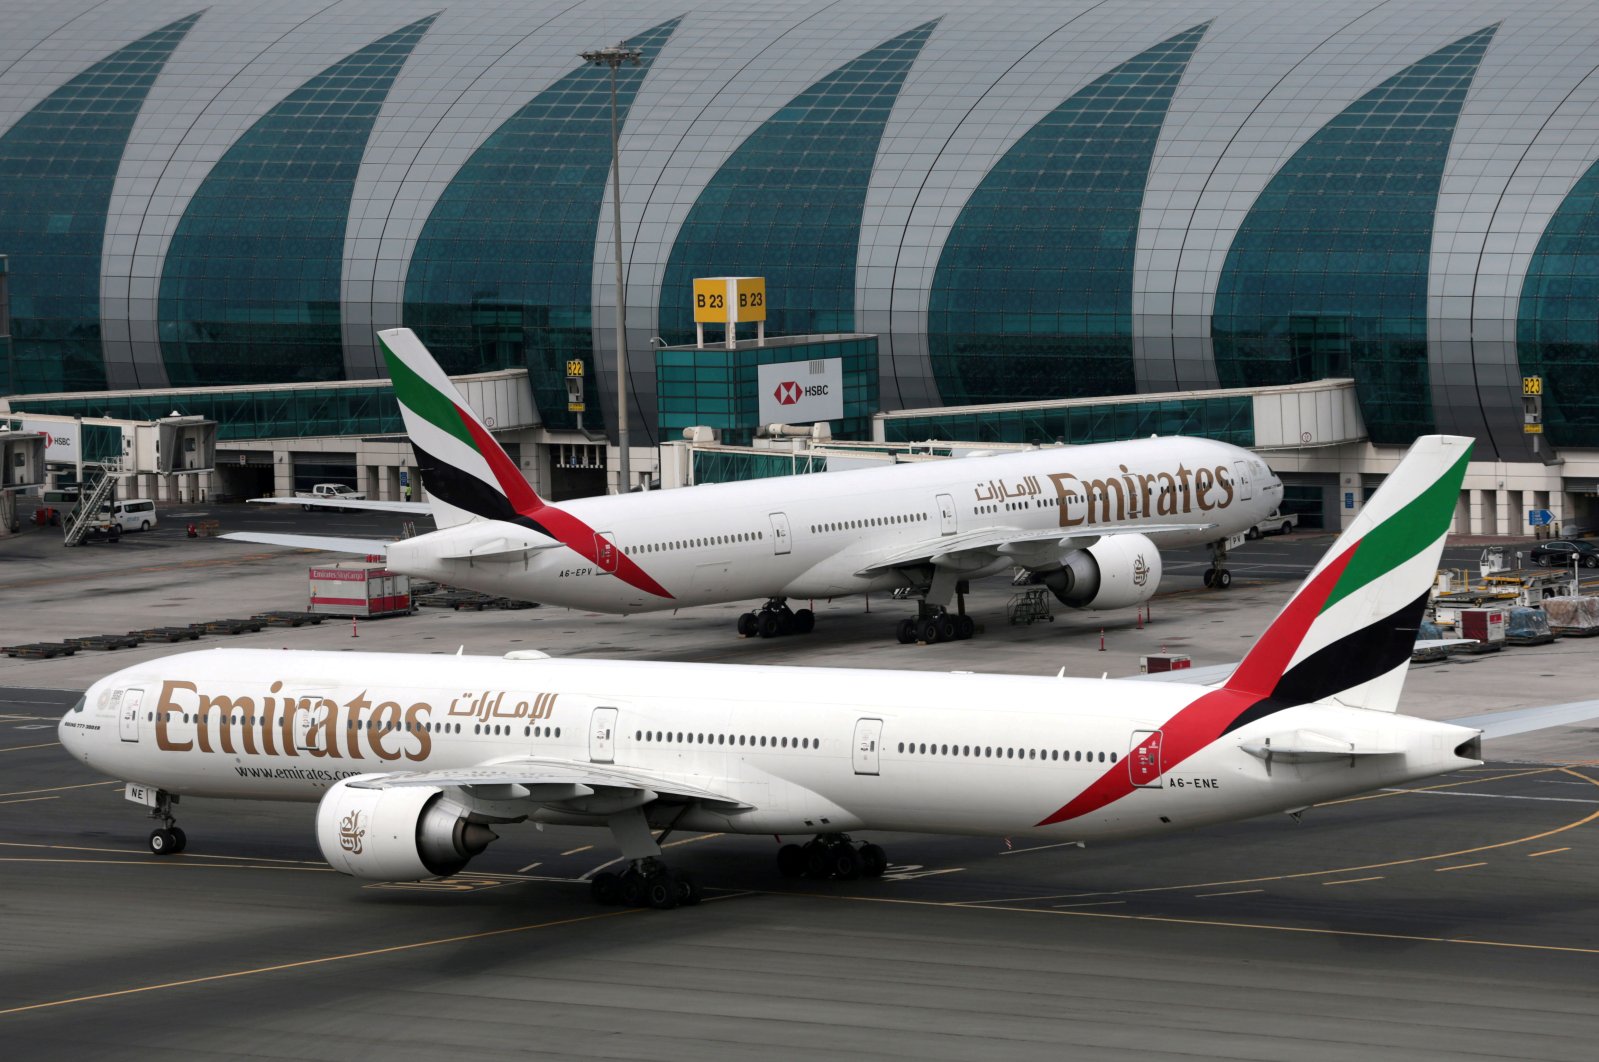 Emirates Airline Boeing 777-300ER planes at Dubai International Airport in Dubai, United Arab Emirates. / Net photo.